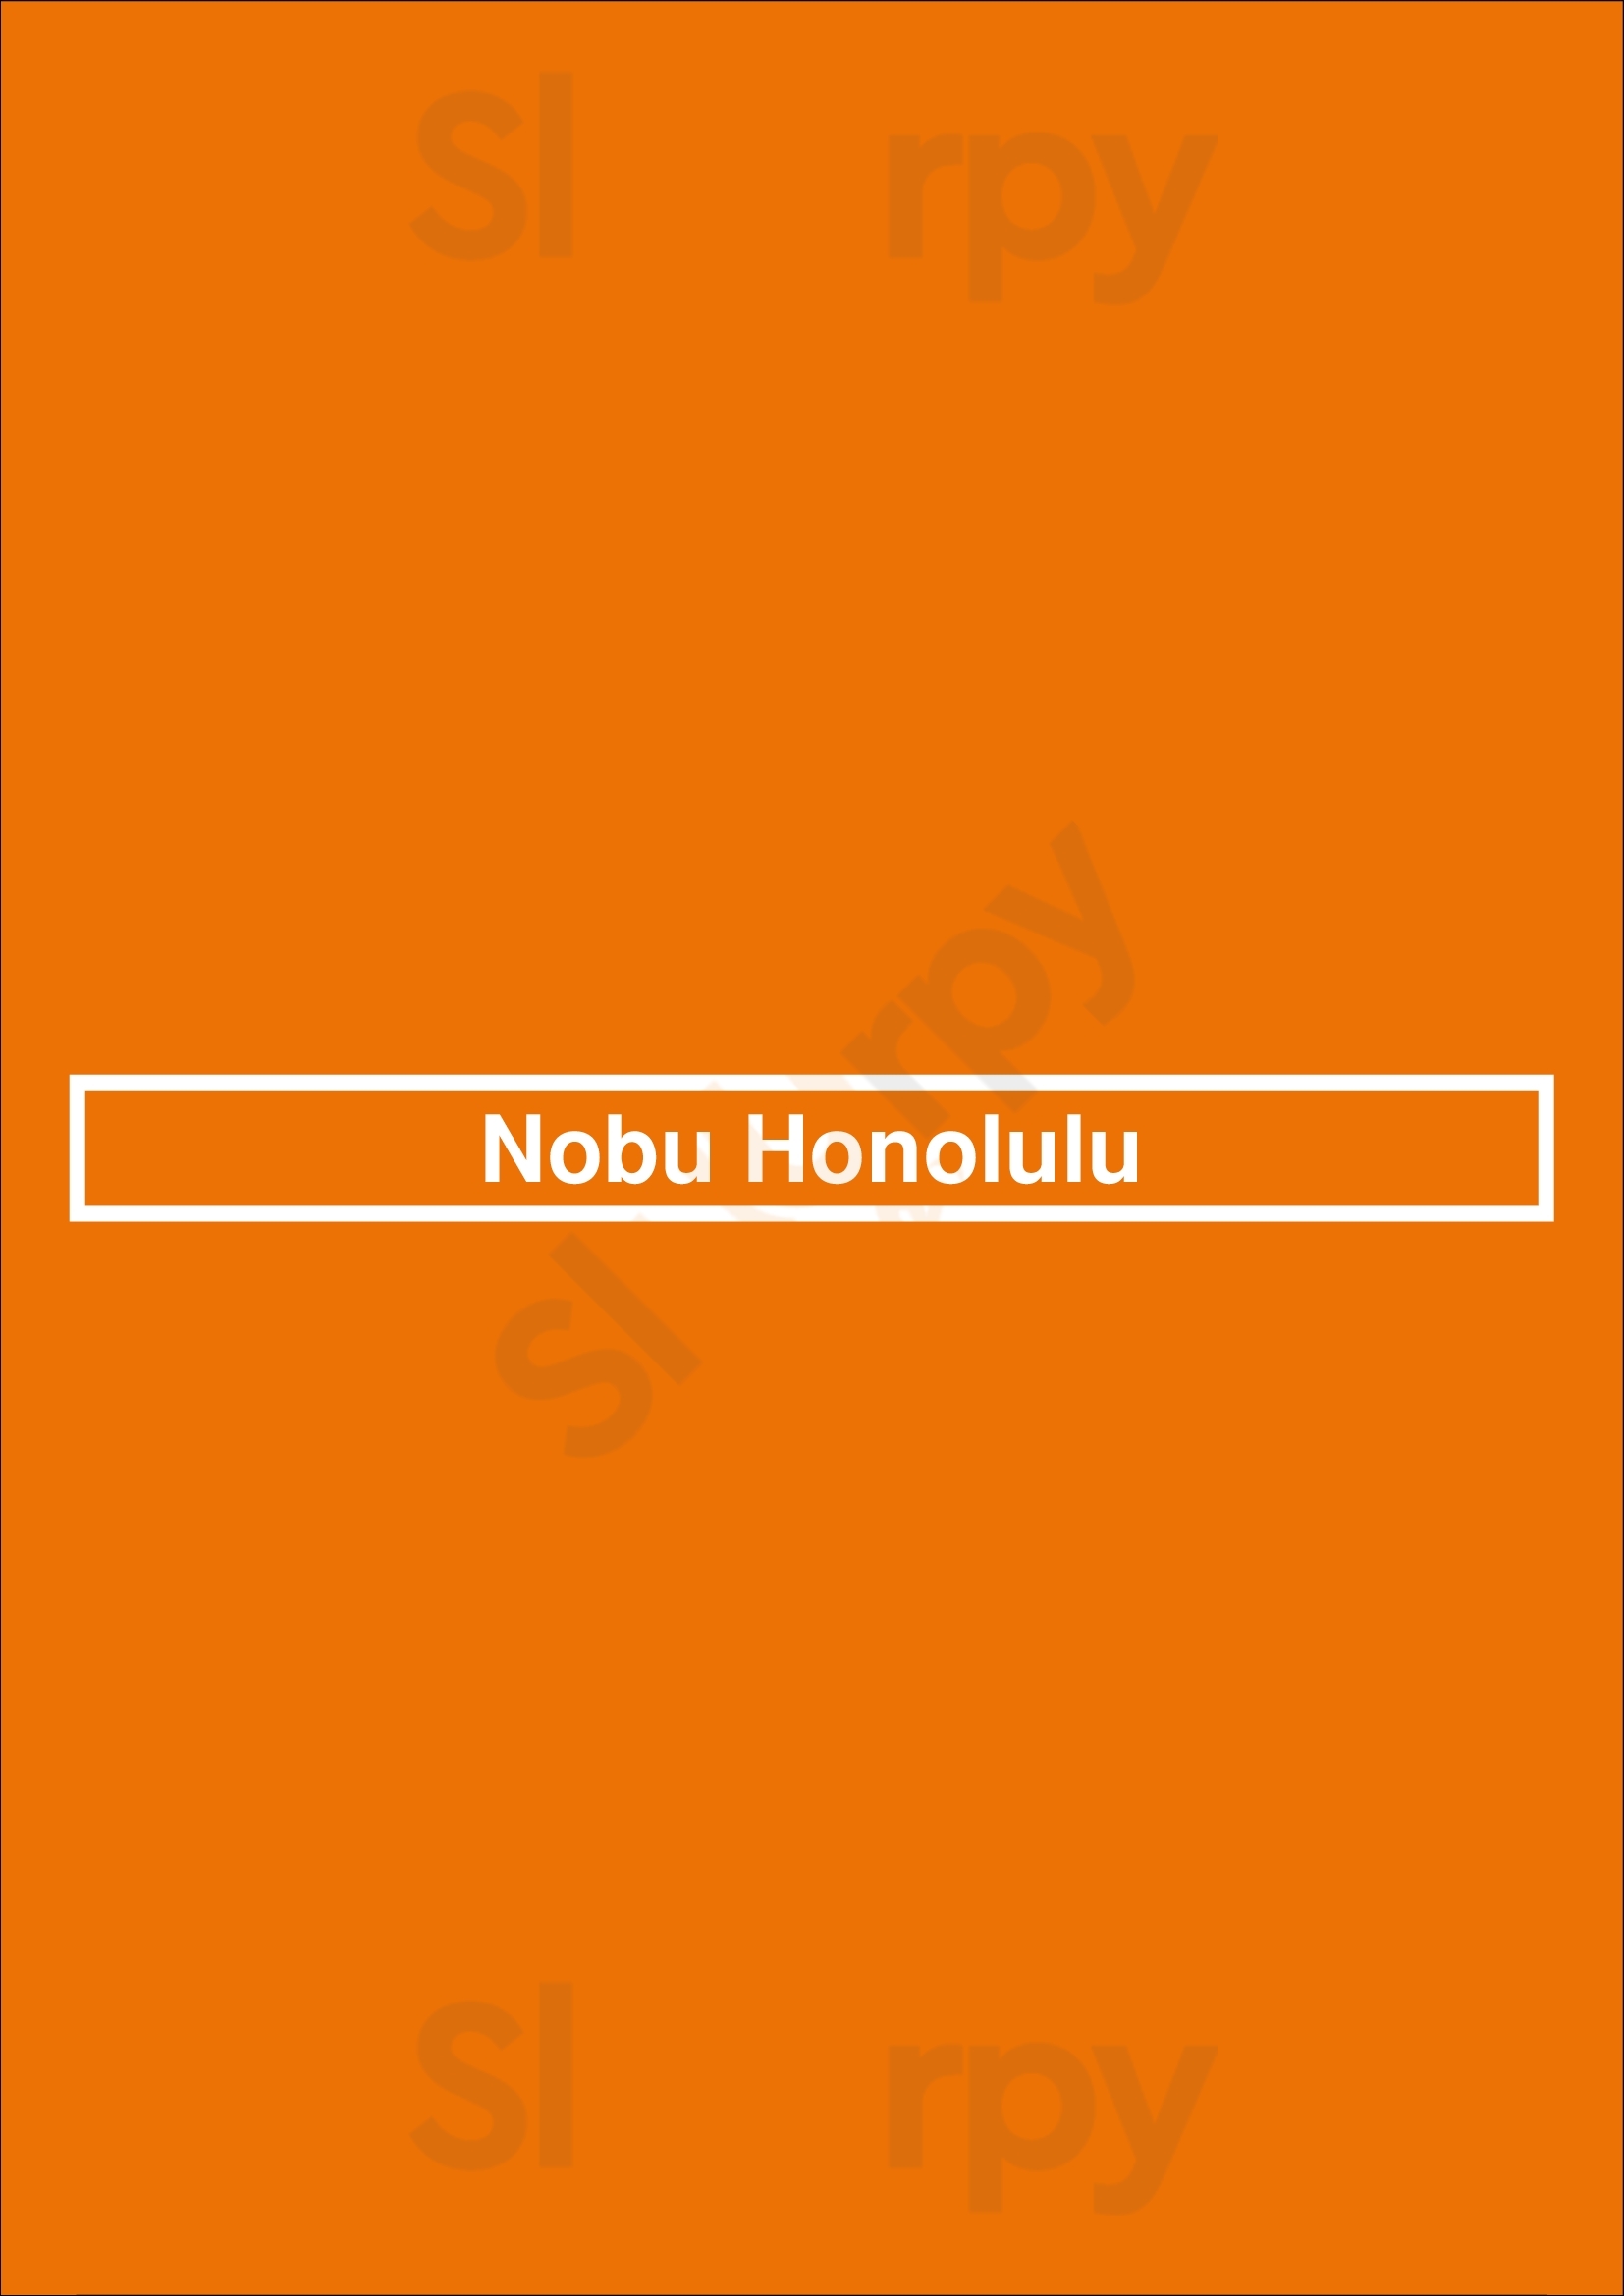 Nobu Honolulu Honolulu Menu - 1